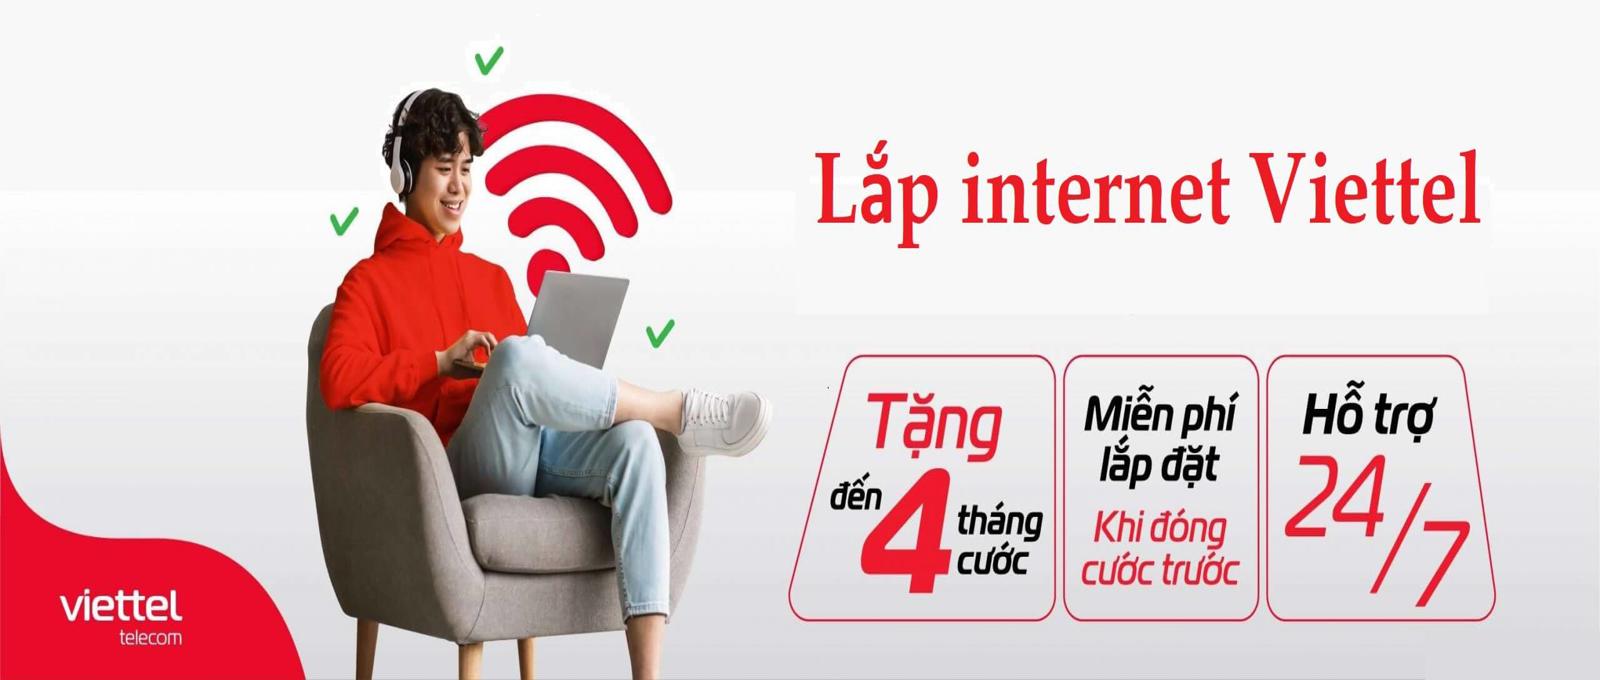 lap-internet-viettel-tang-den-4-thang